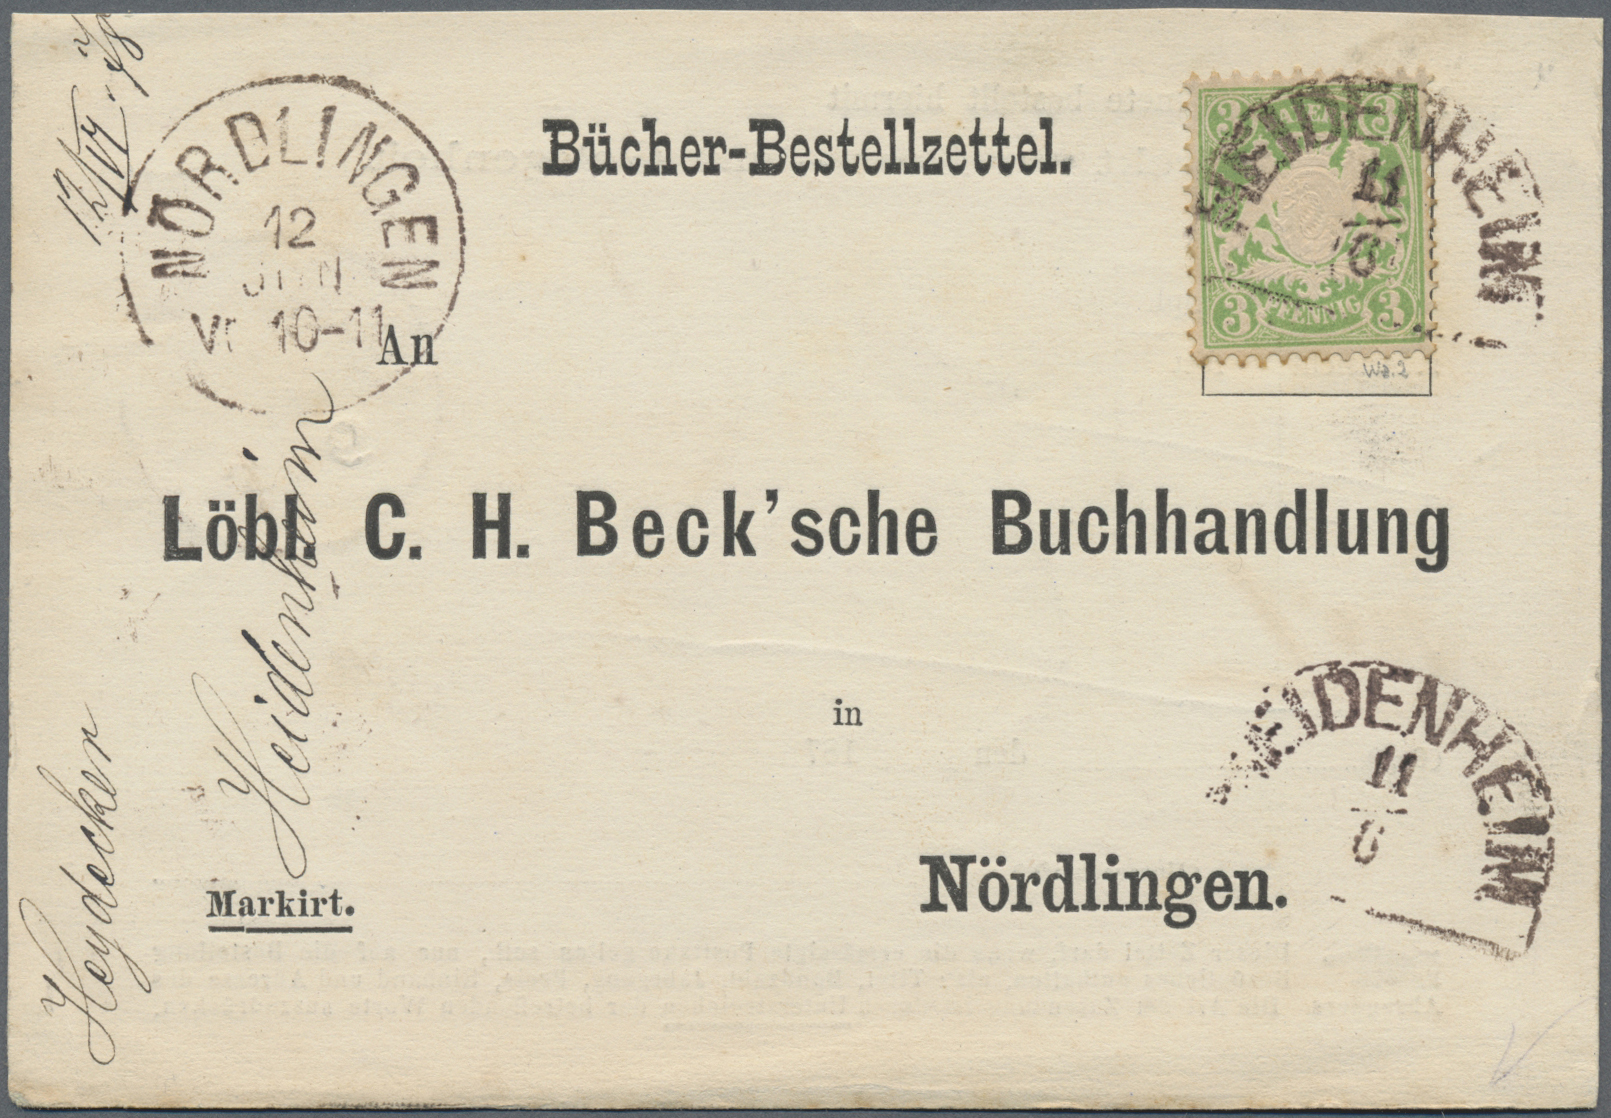 Lot 36190 - Bayern - Marken und Briefe  -  Auktionshaus Christoph Gärtner GmbH & Co. KG Sale #44 Collections Germany